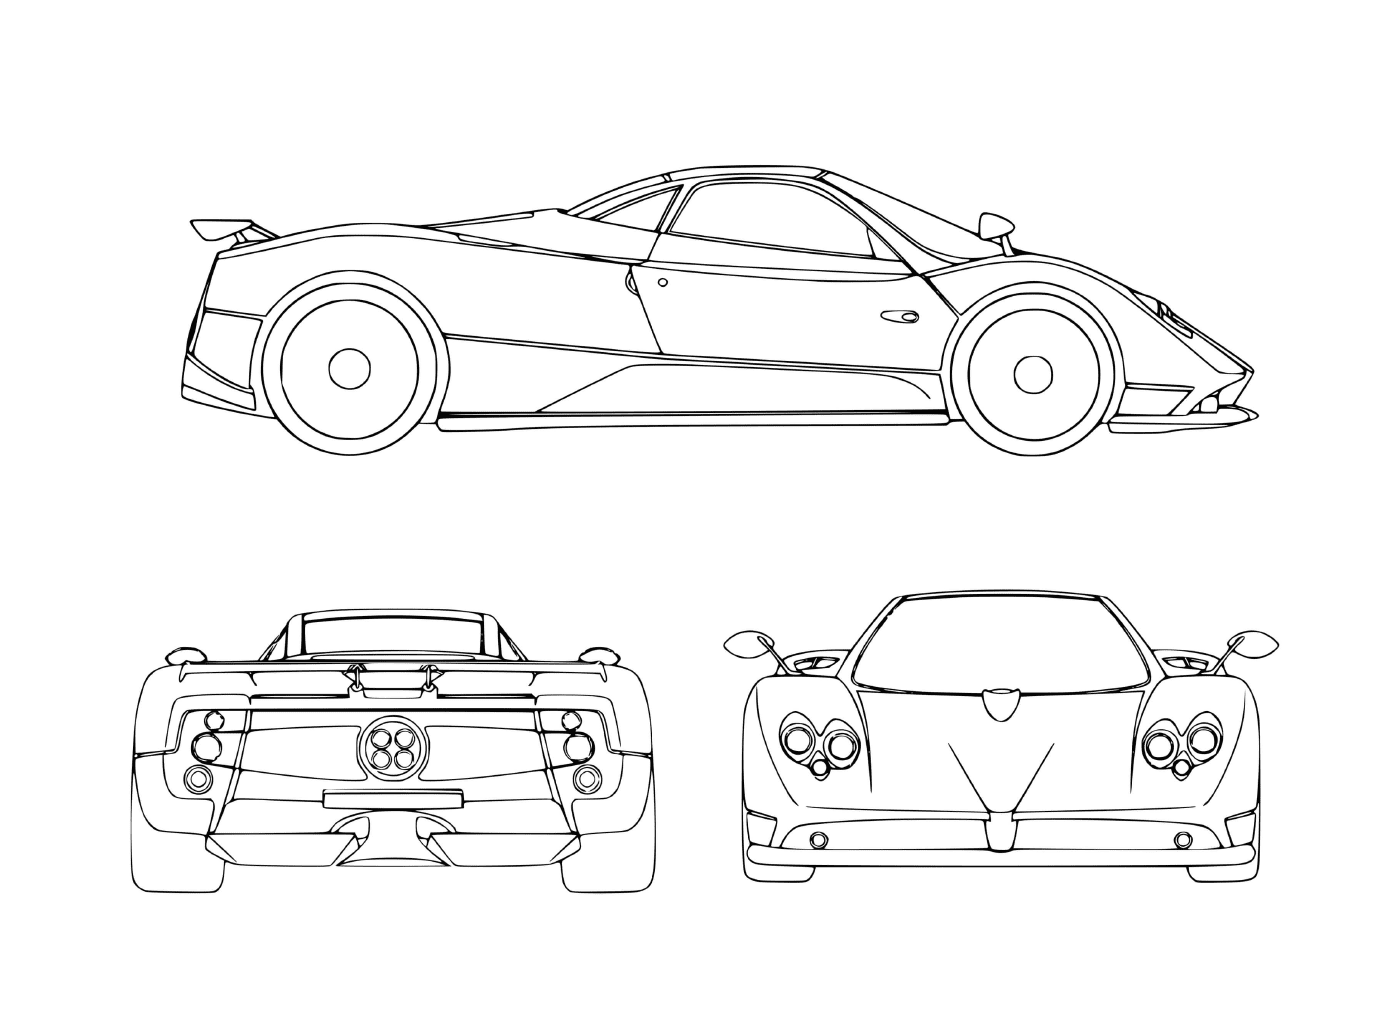  Turbo sports car for car racing 